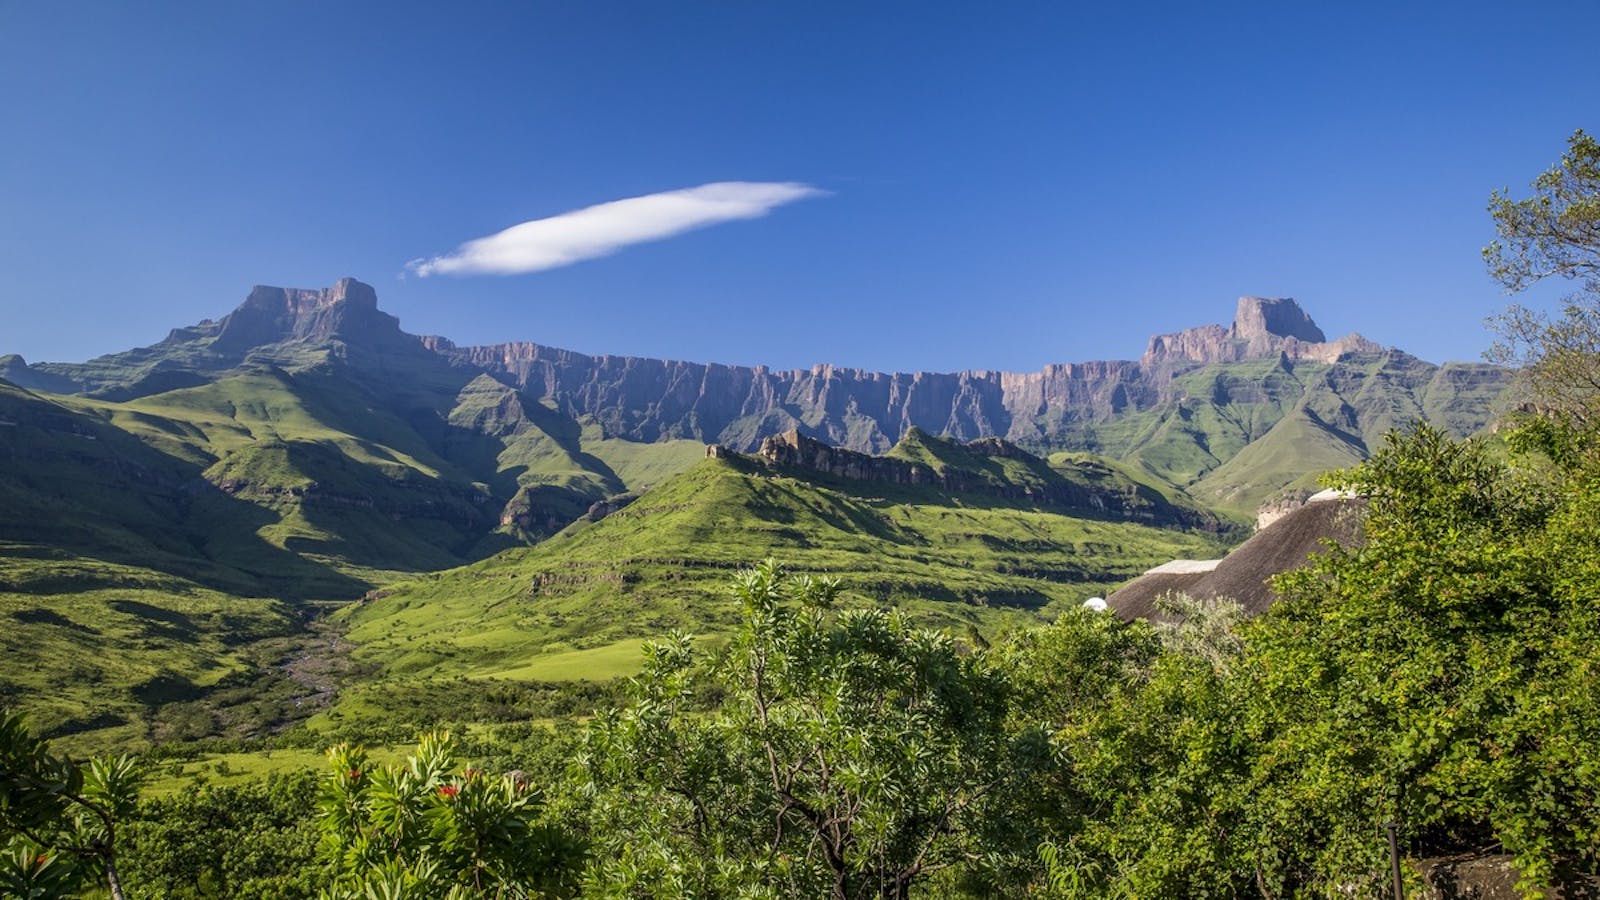 Drakensberg Escarpment Savanna and Thicket